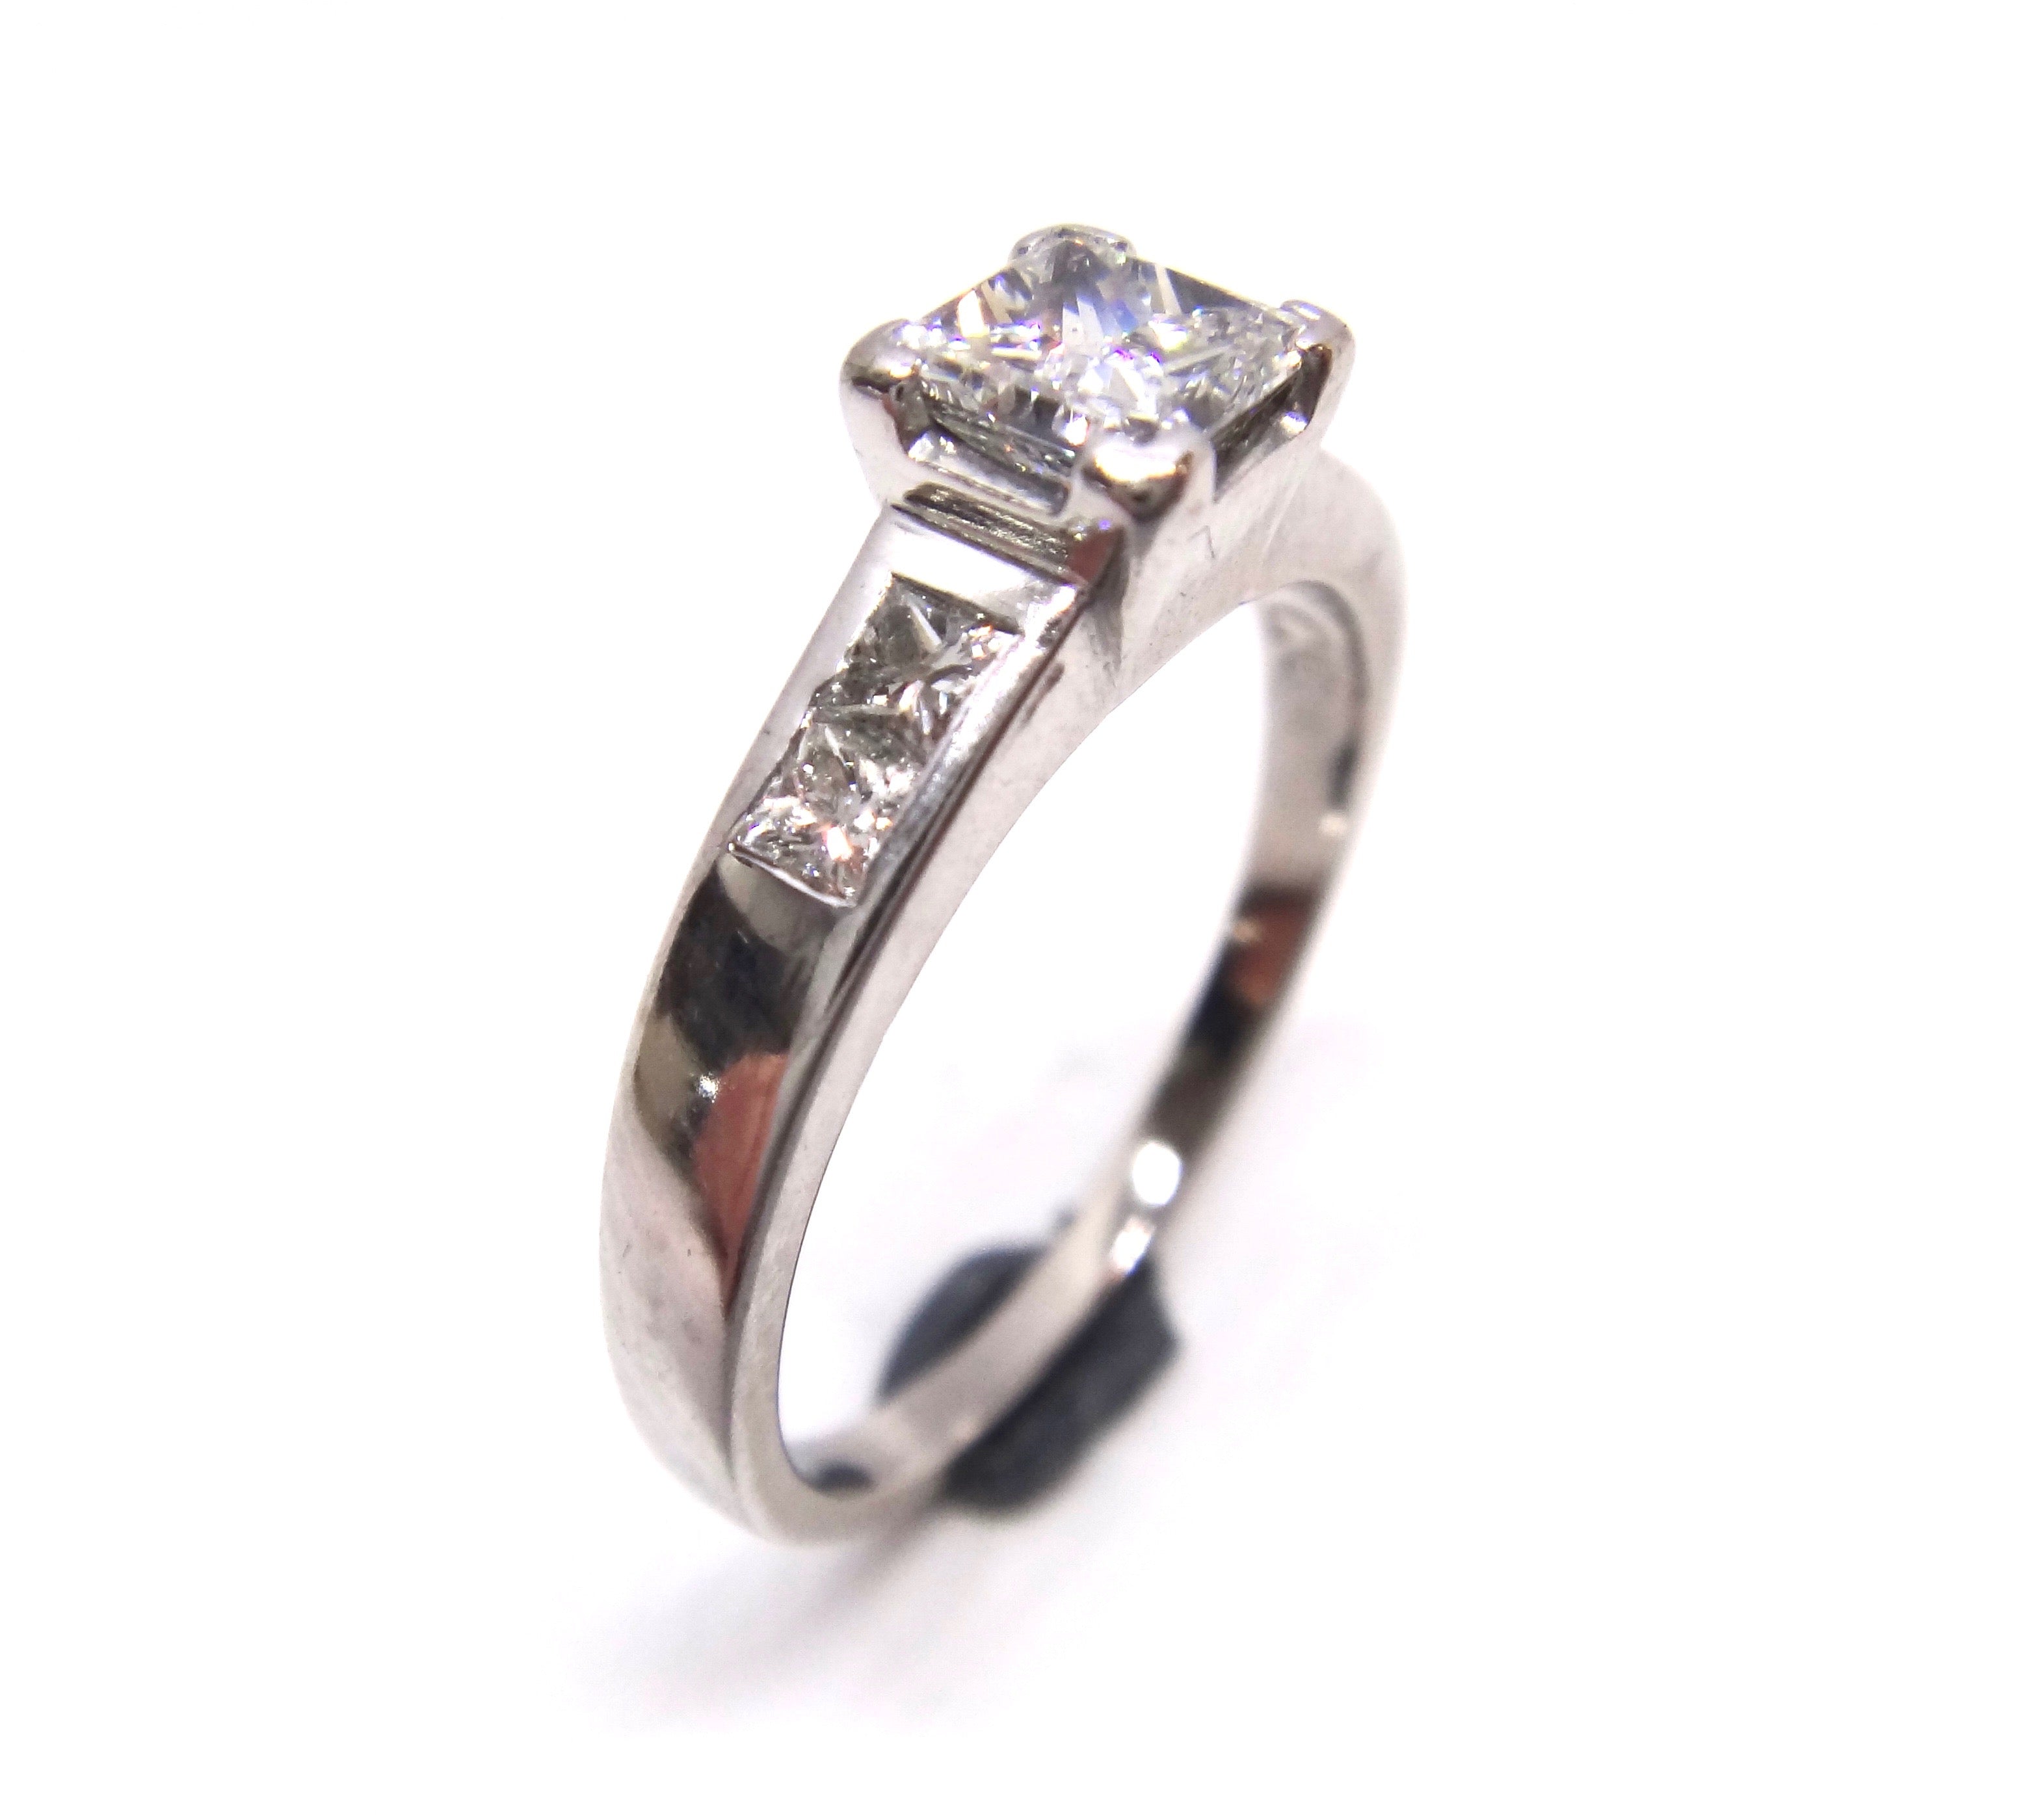 18CT White GOLD & Princess Cut DIAMOND Ring